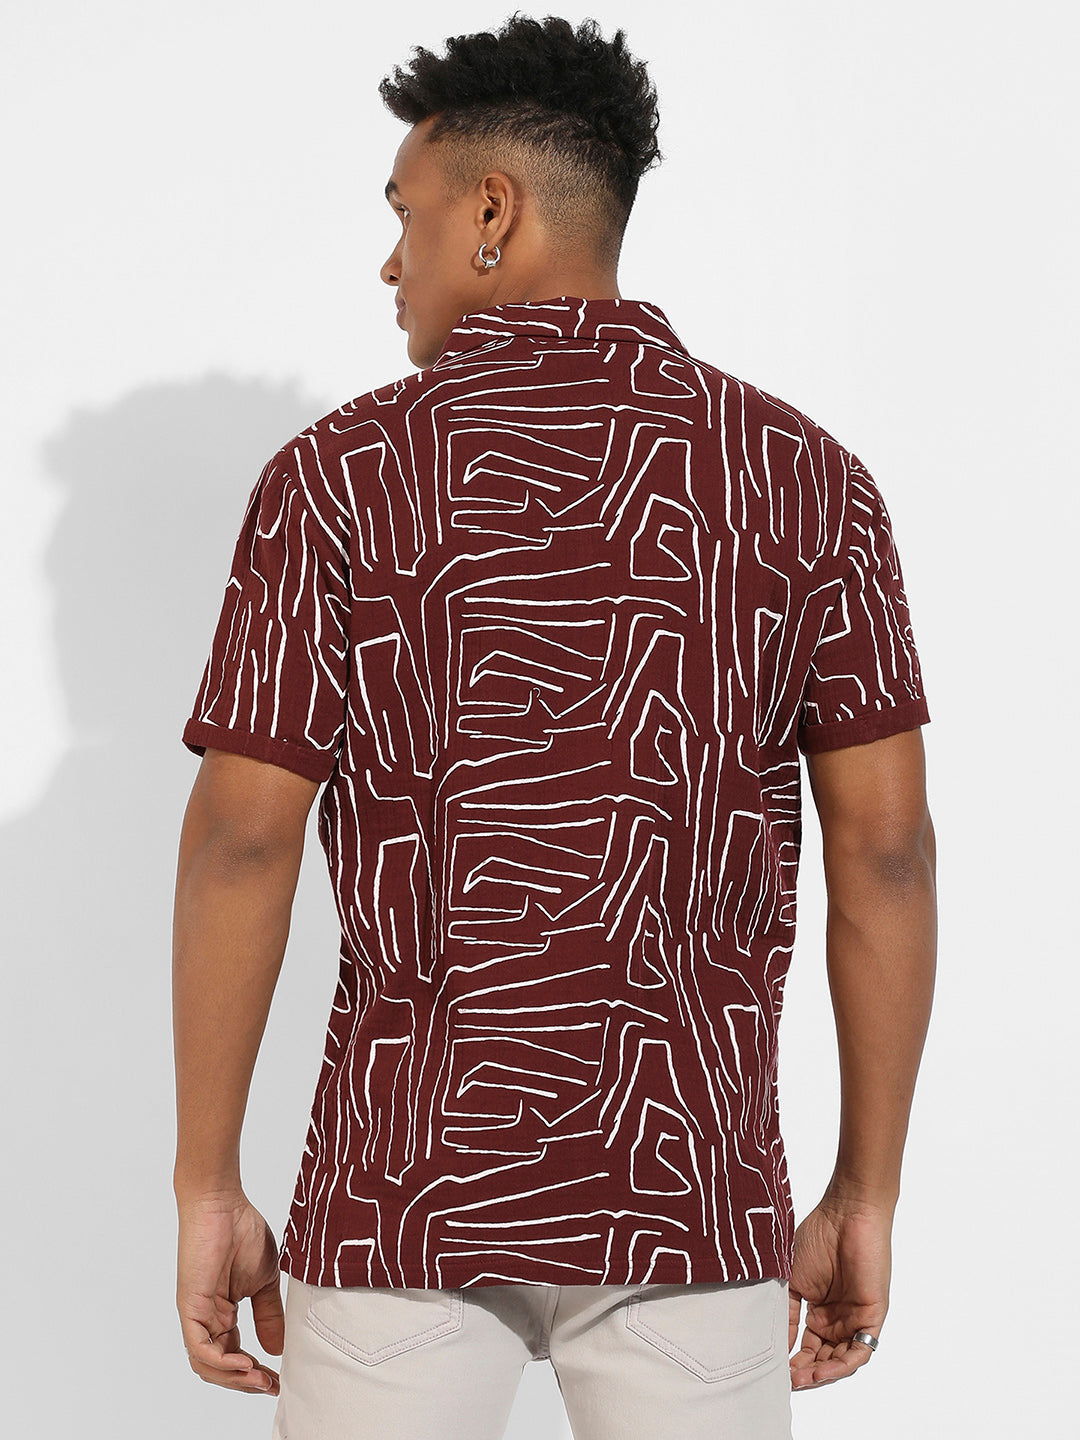 Abstract Lines Print Shirt